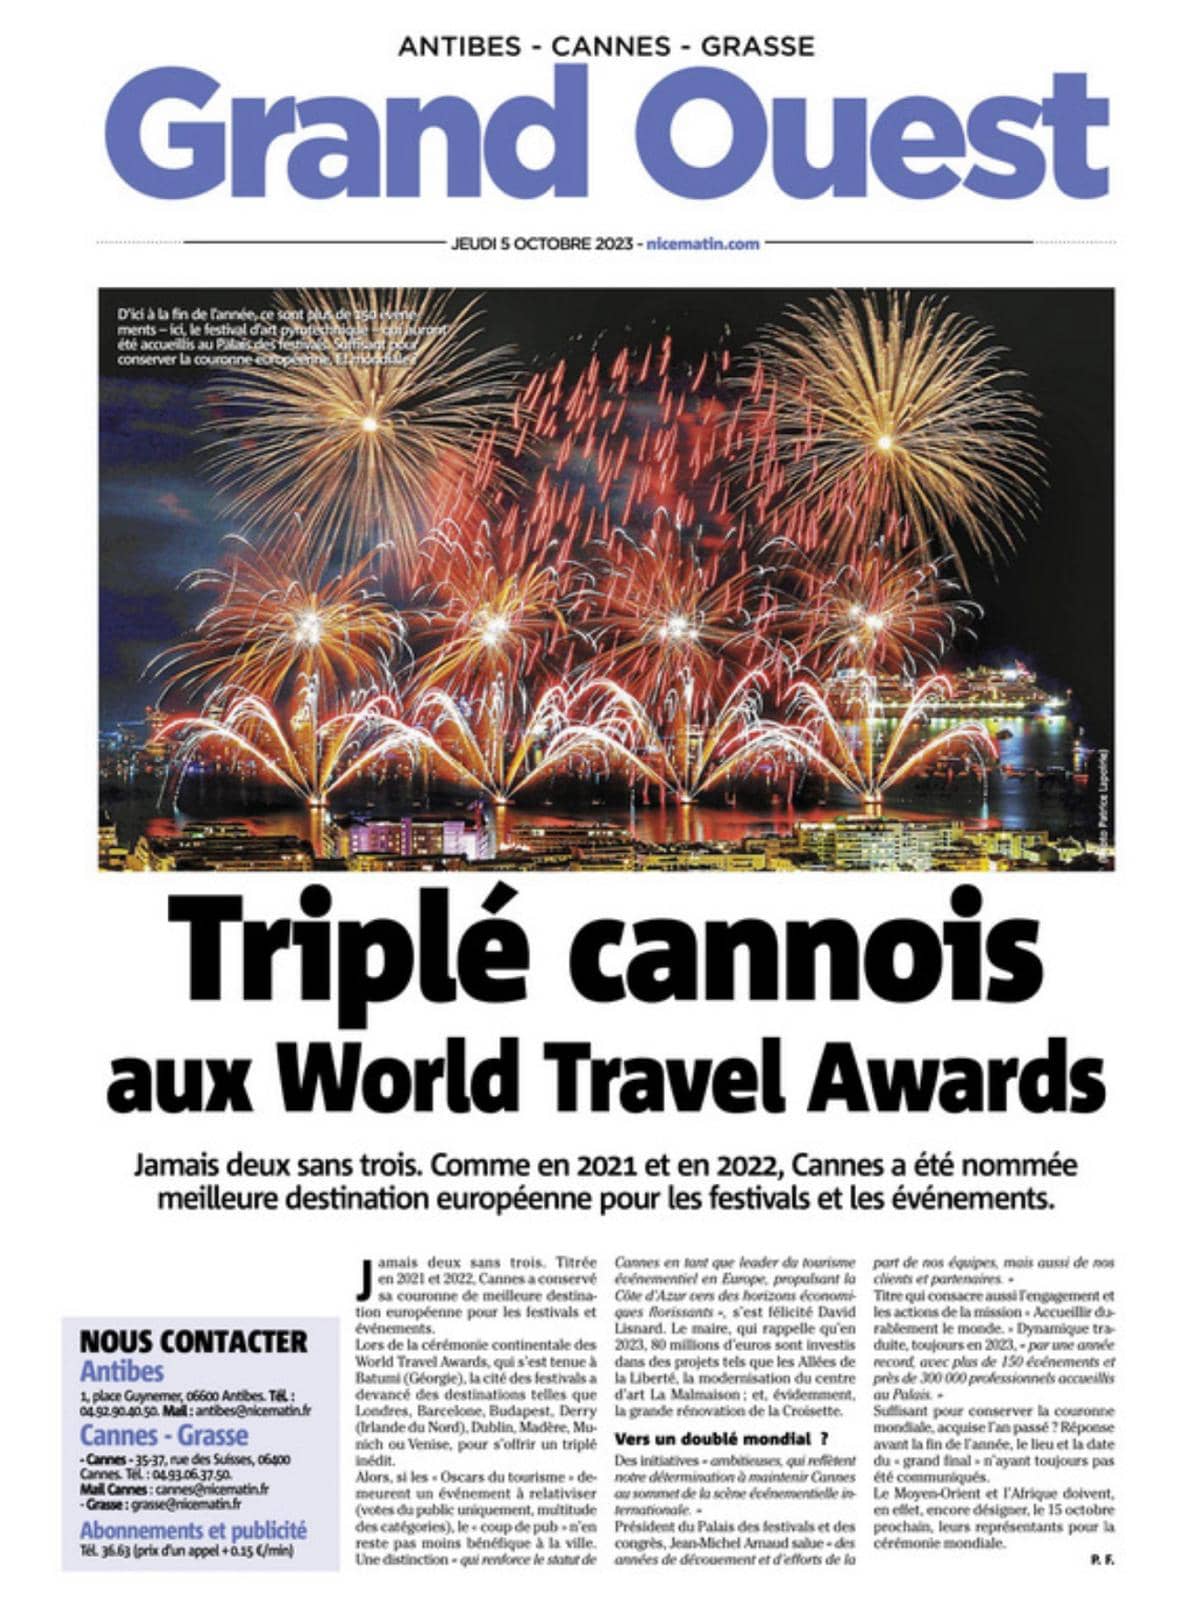 Grand Ouest – Triplé Cannois aux World Travel Awards